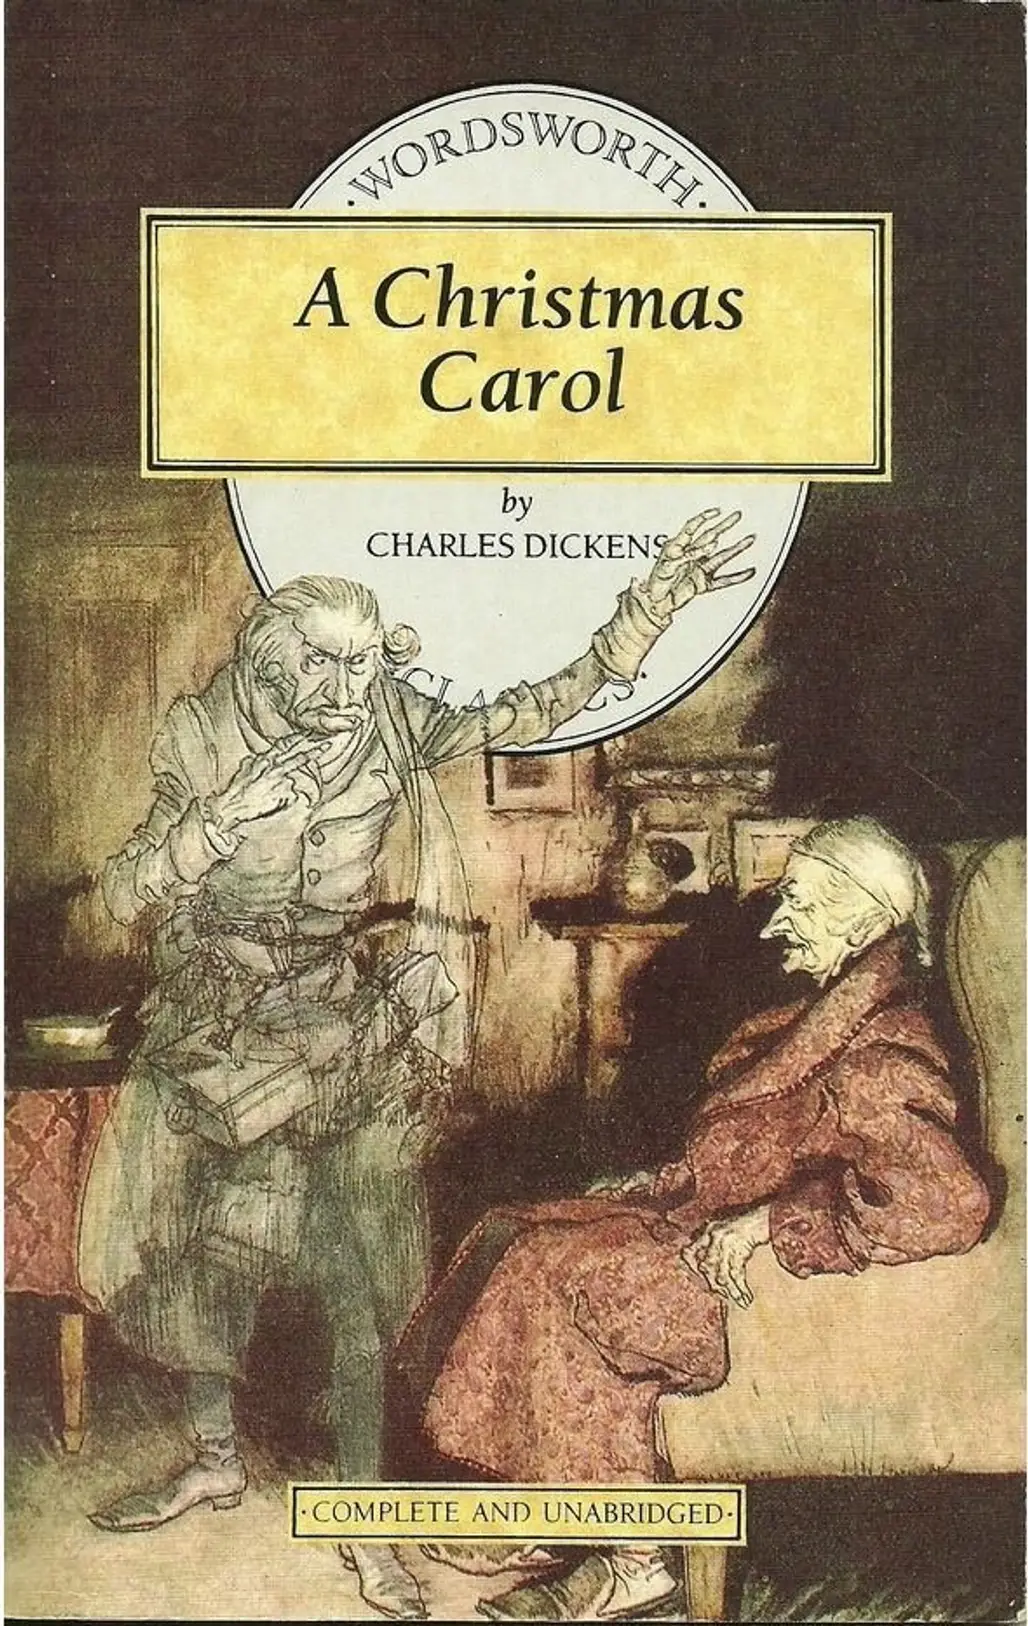 The Christmas Carol – Charles Dickens